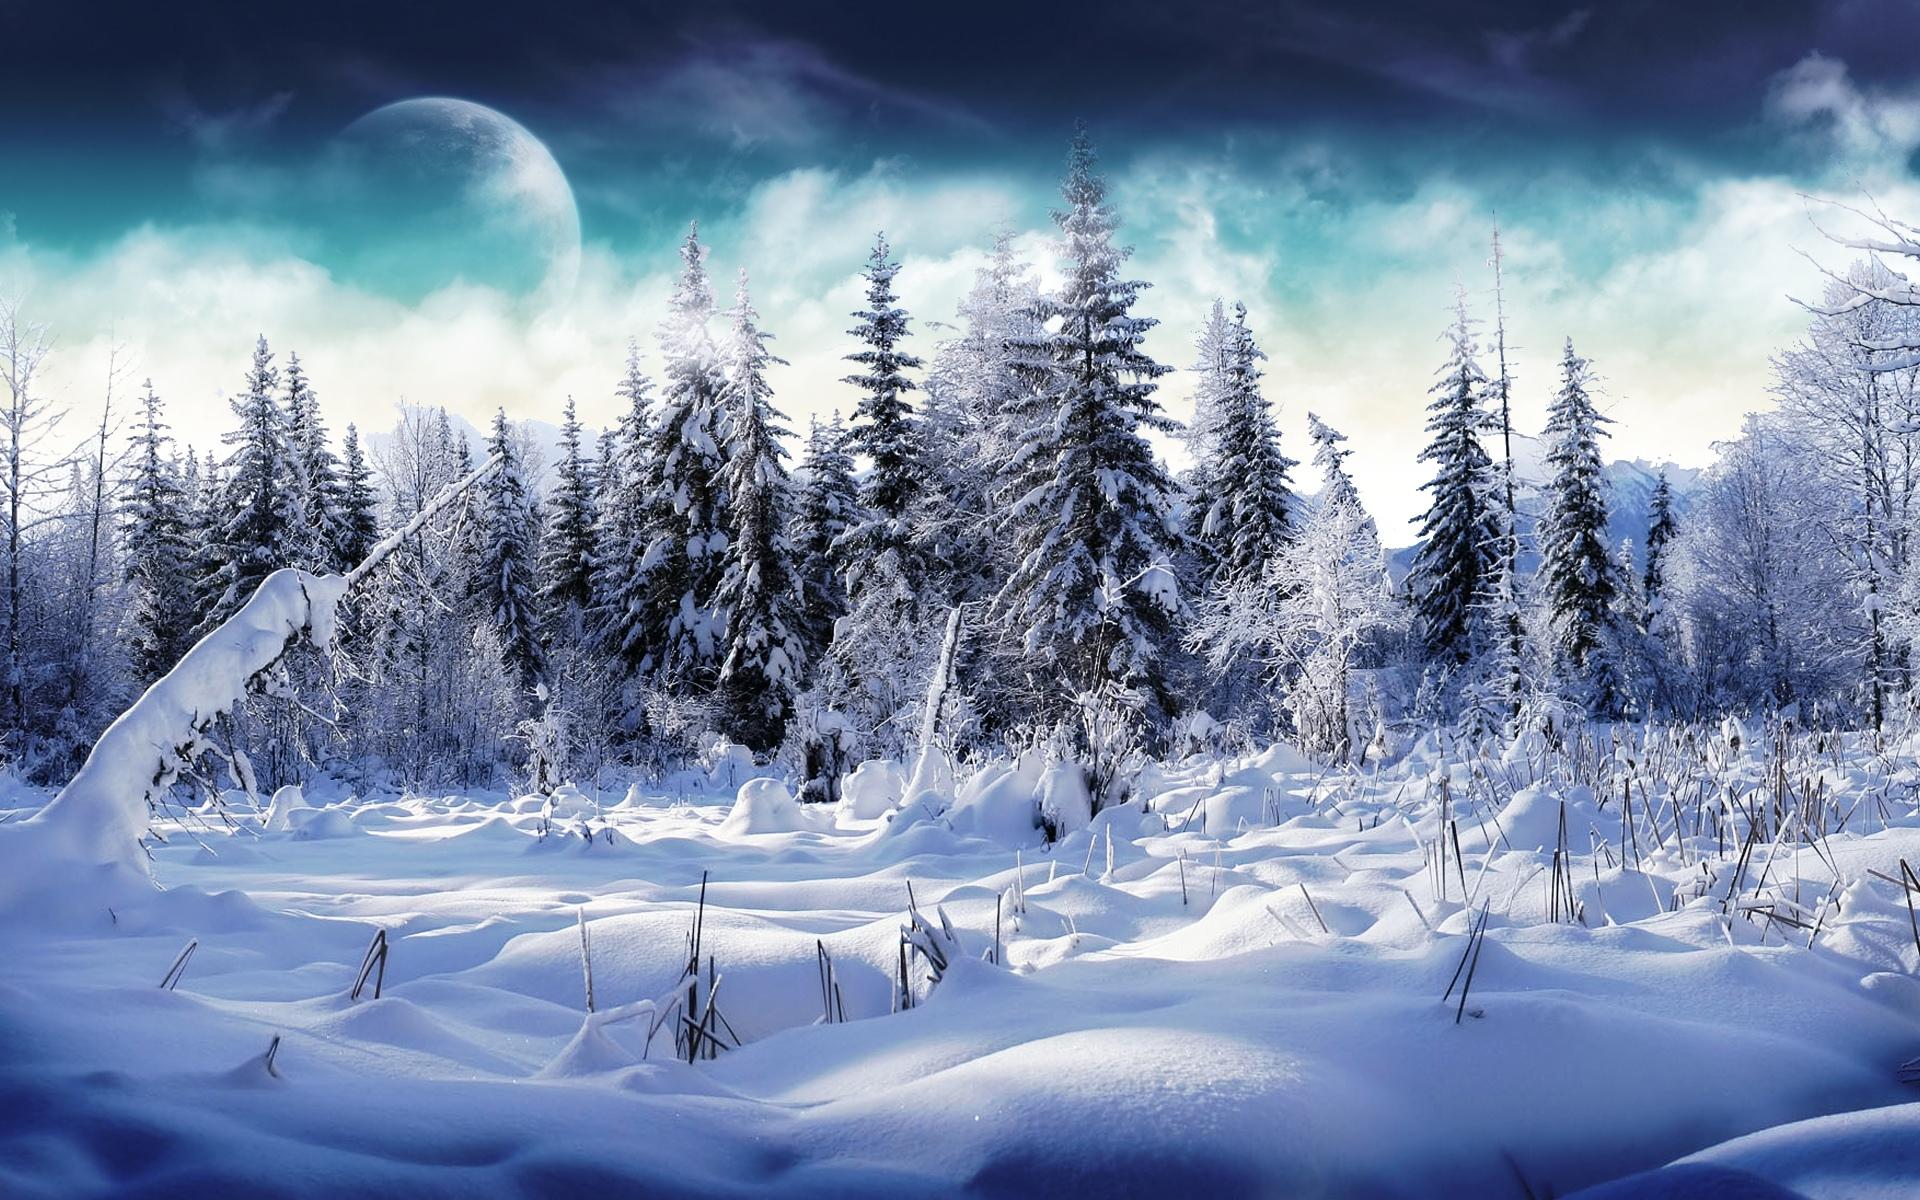 Winter, wonderland, fantasy, nature